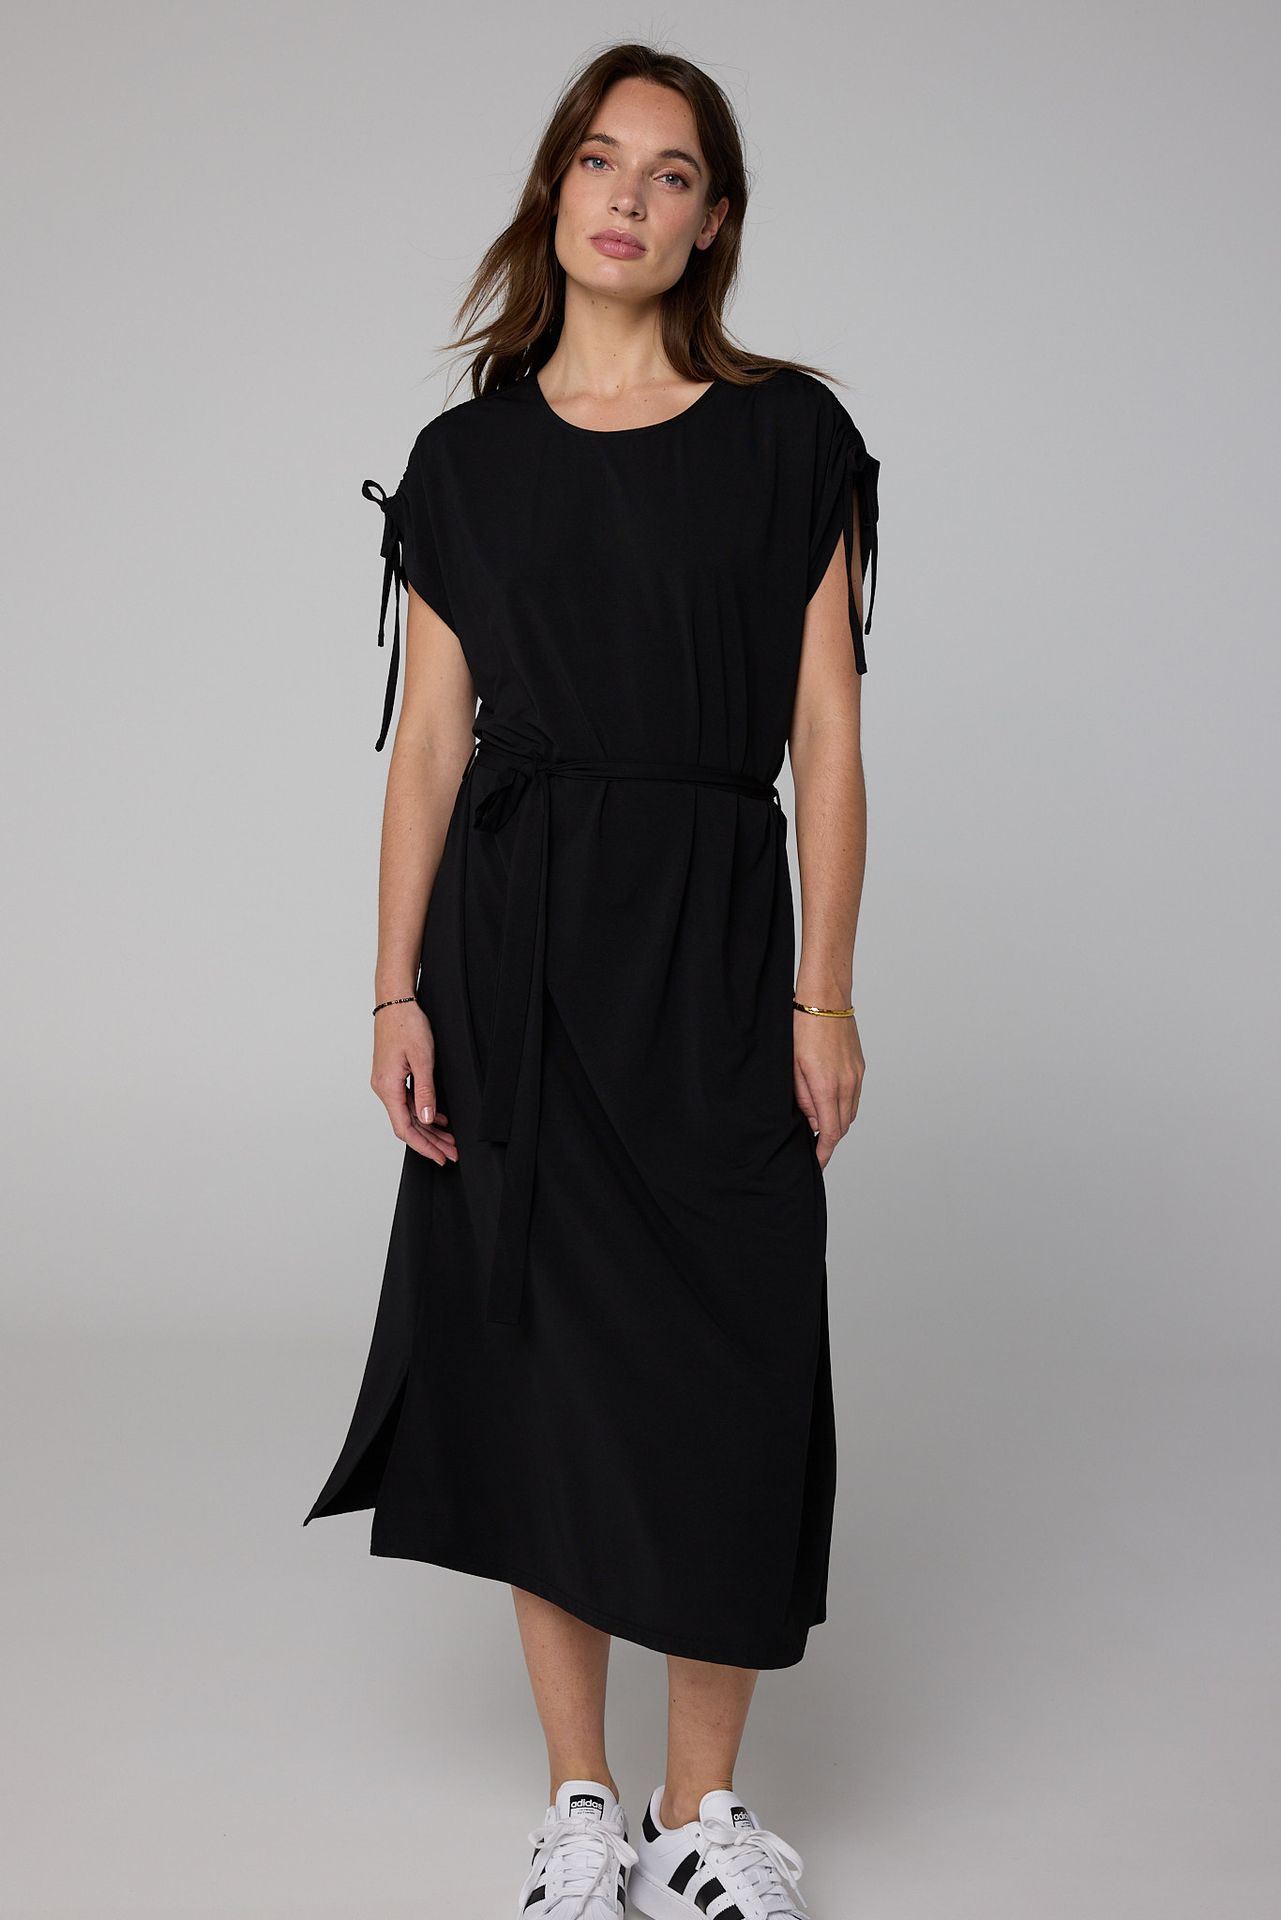  Midi jurk zwart met koordjes black 212719-001-48